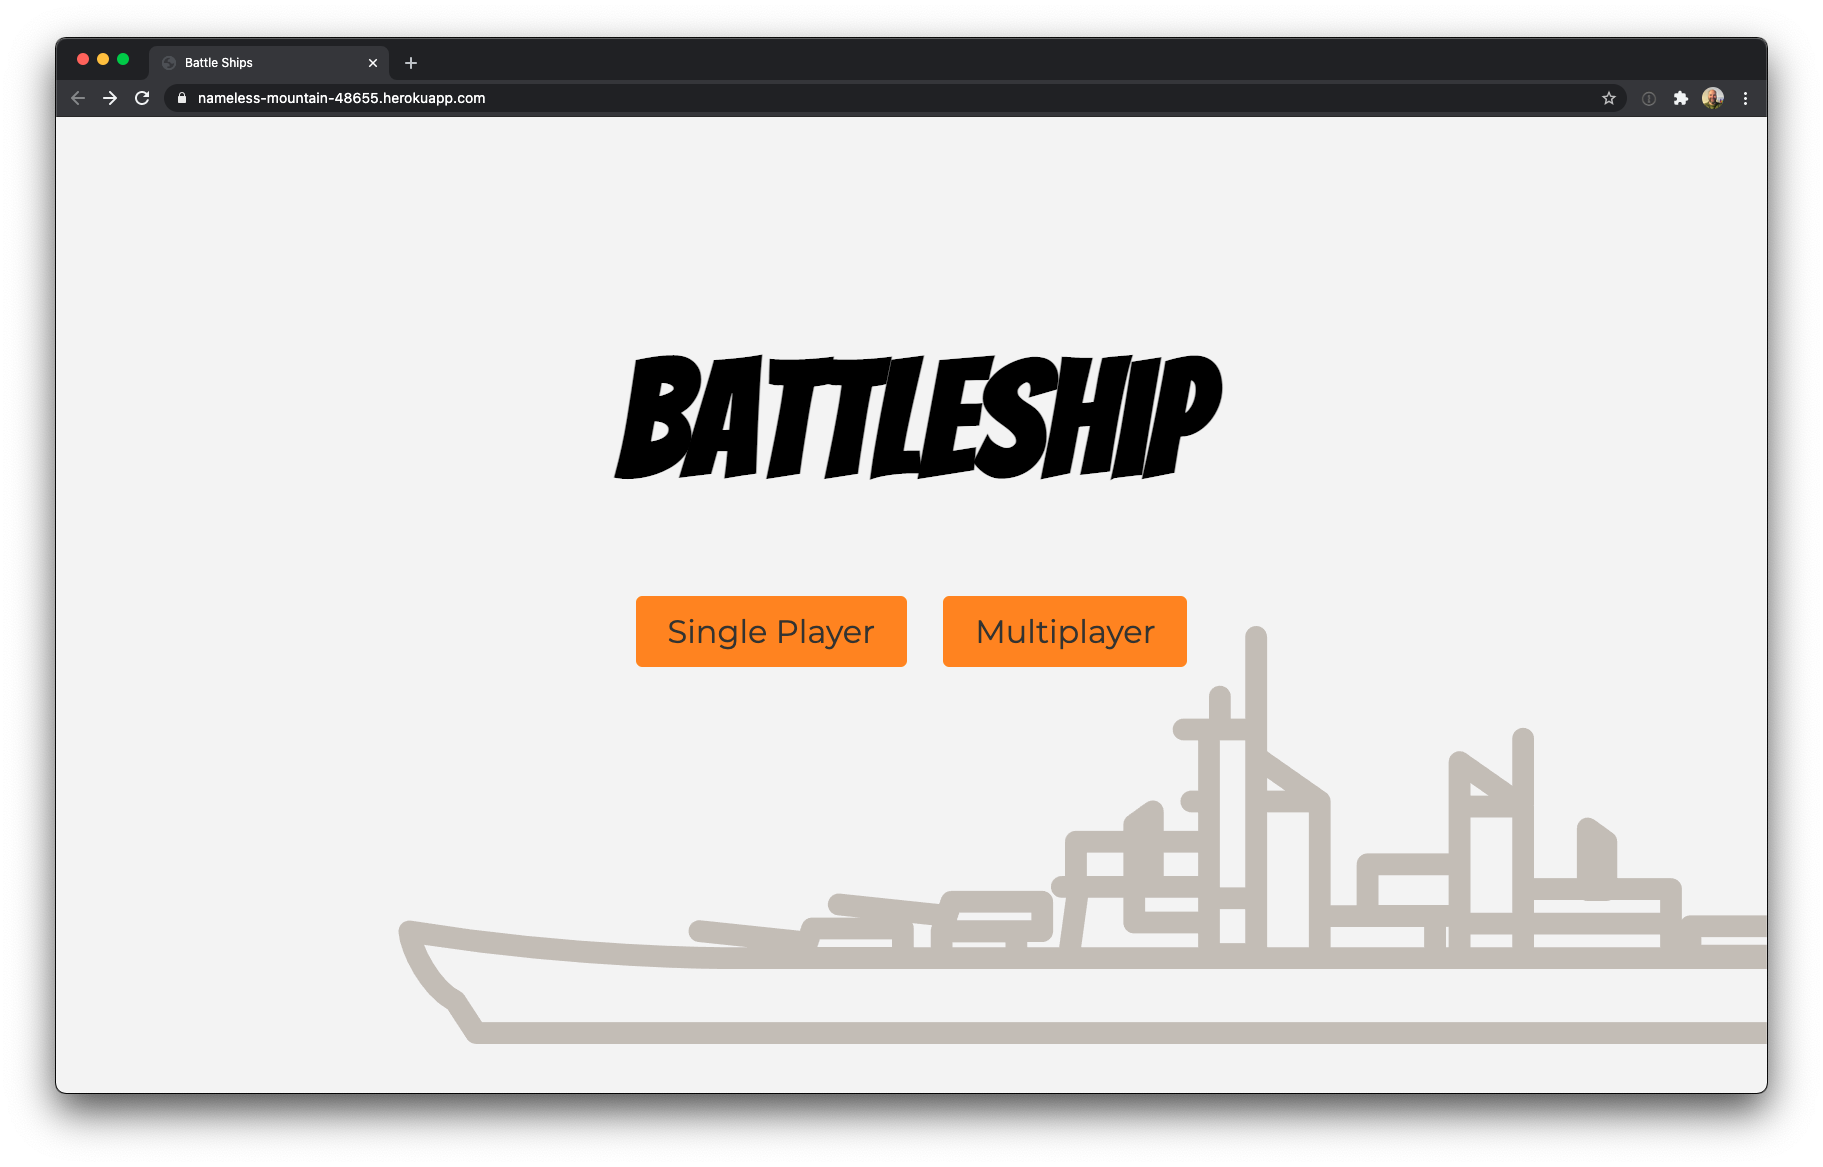 Battleship web app deployed with Heroku